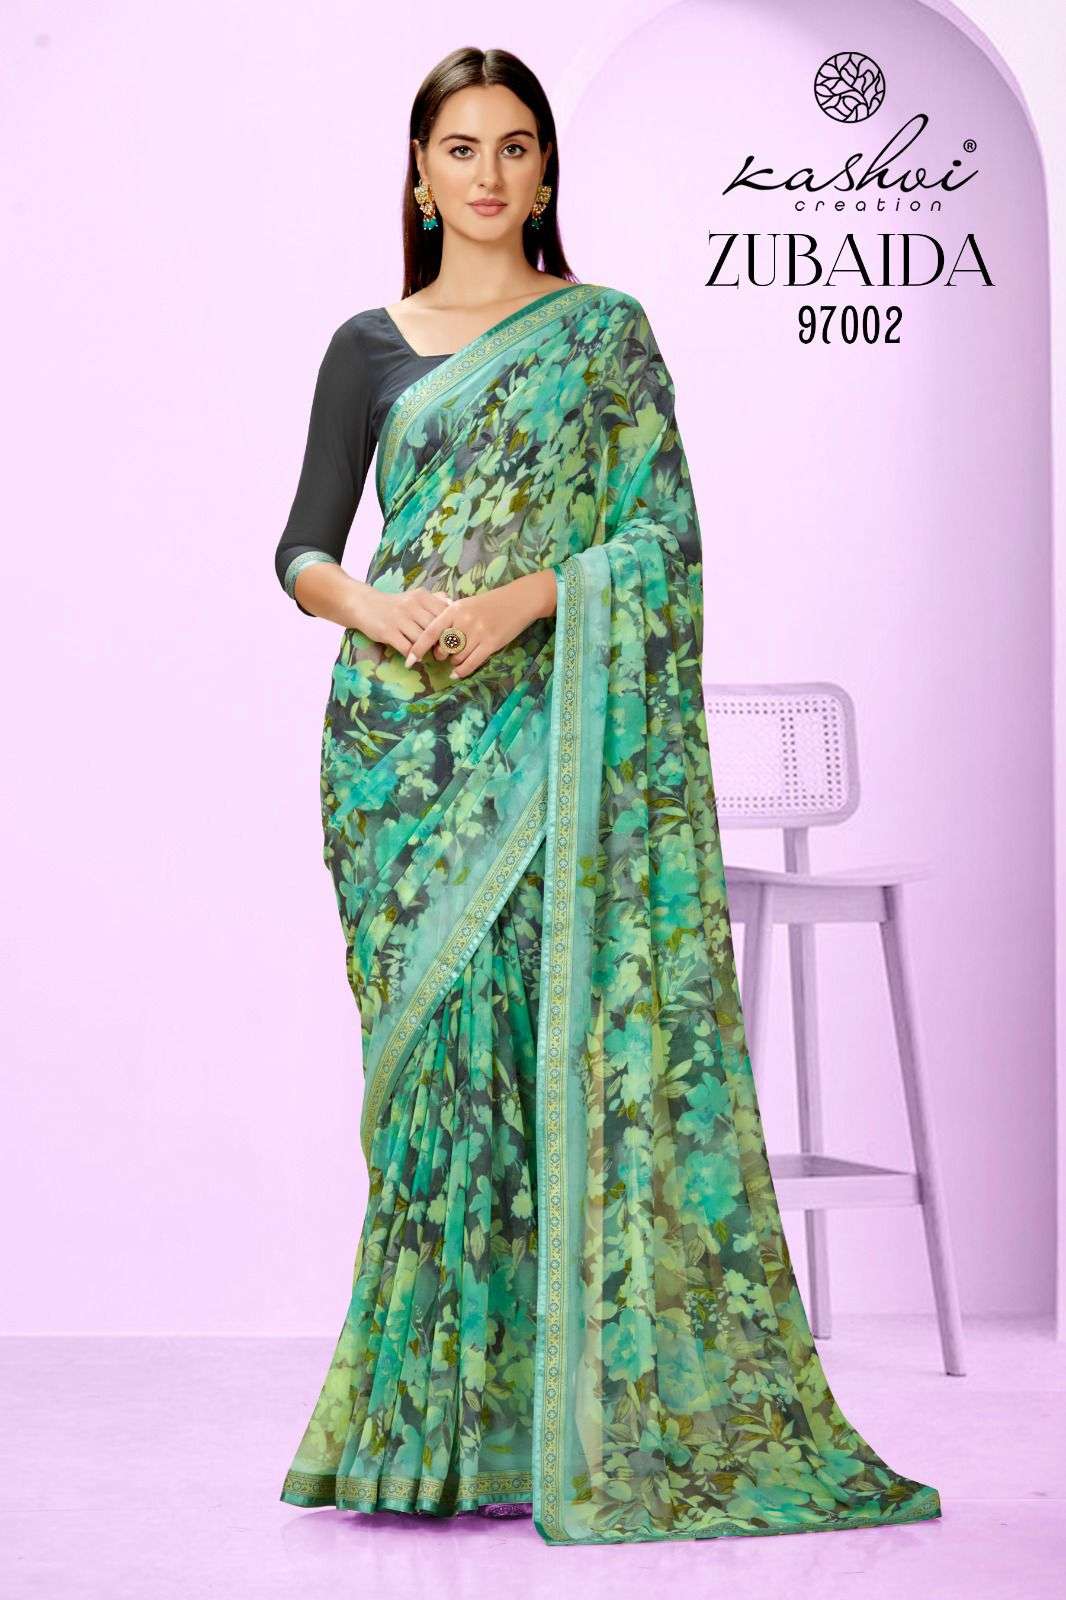 kashvi creation zubaida 97001-97008 series daily uses designer saree catalogue online dealer surat